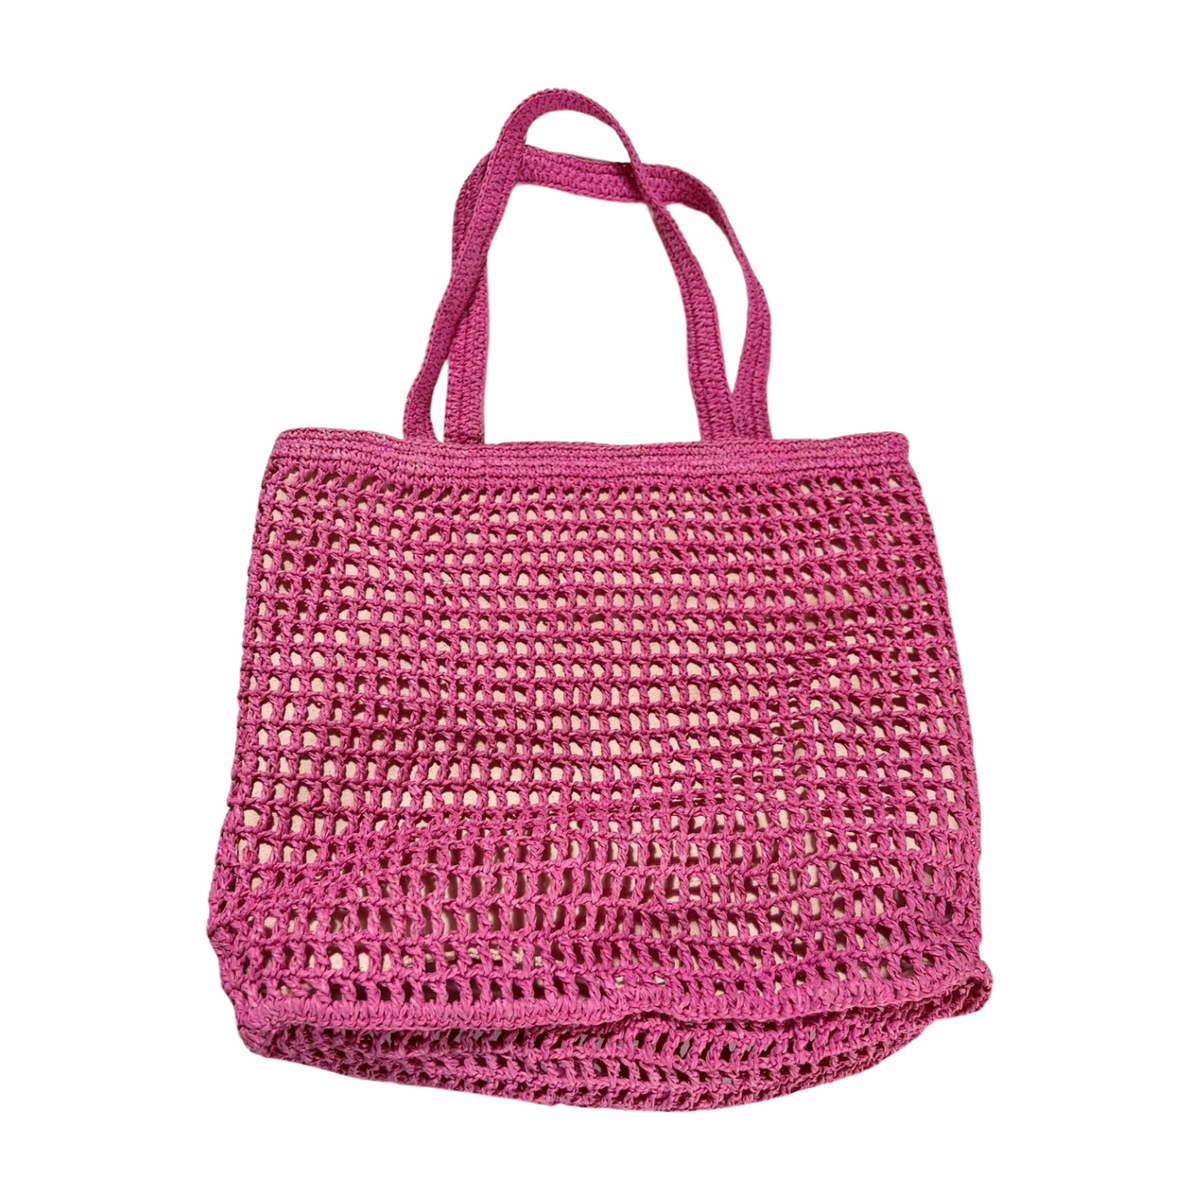 Madewell- Pink Ratan Beach Bag NEW WITH TAGS!